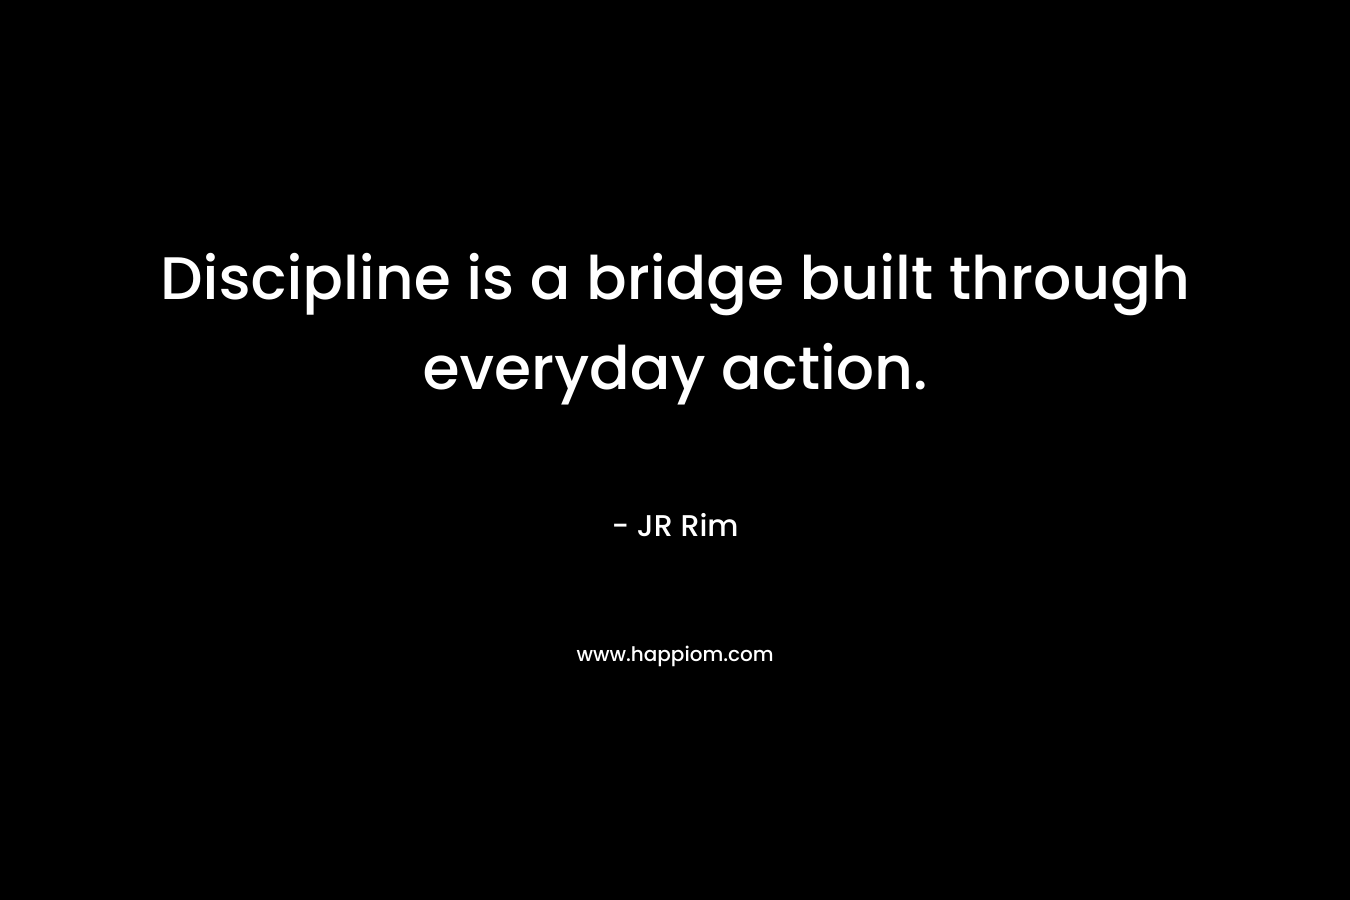 Discipline is a bridge built through everyday action.